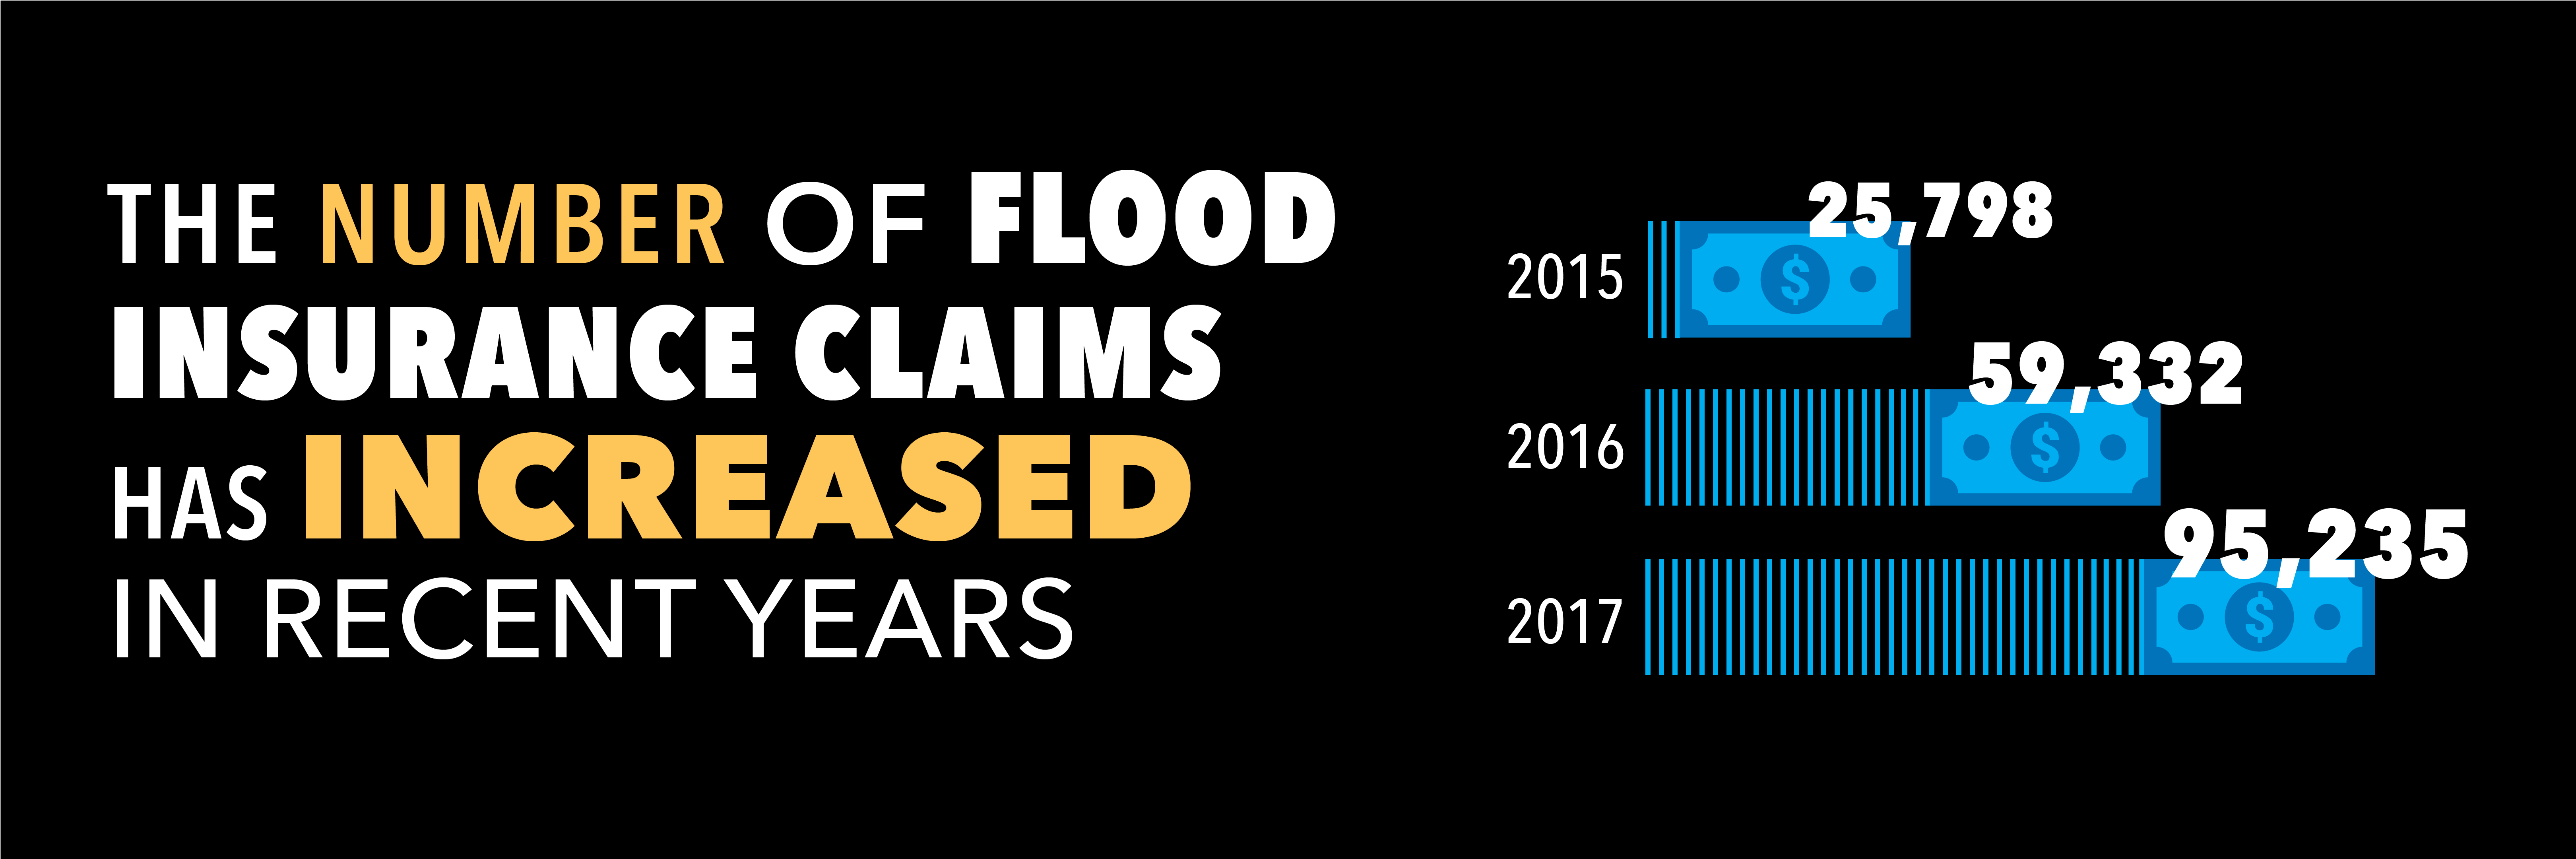 Flood graphic 1